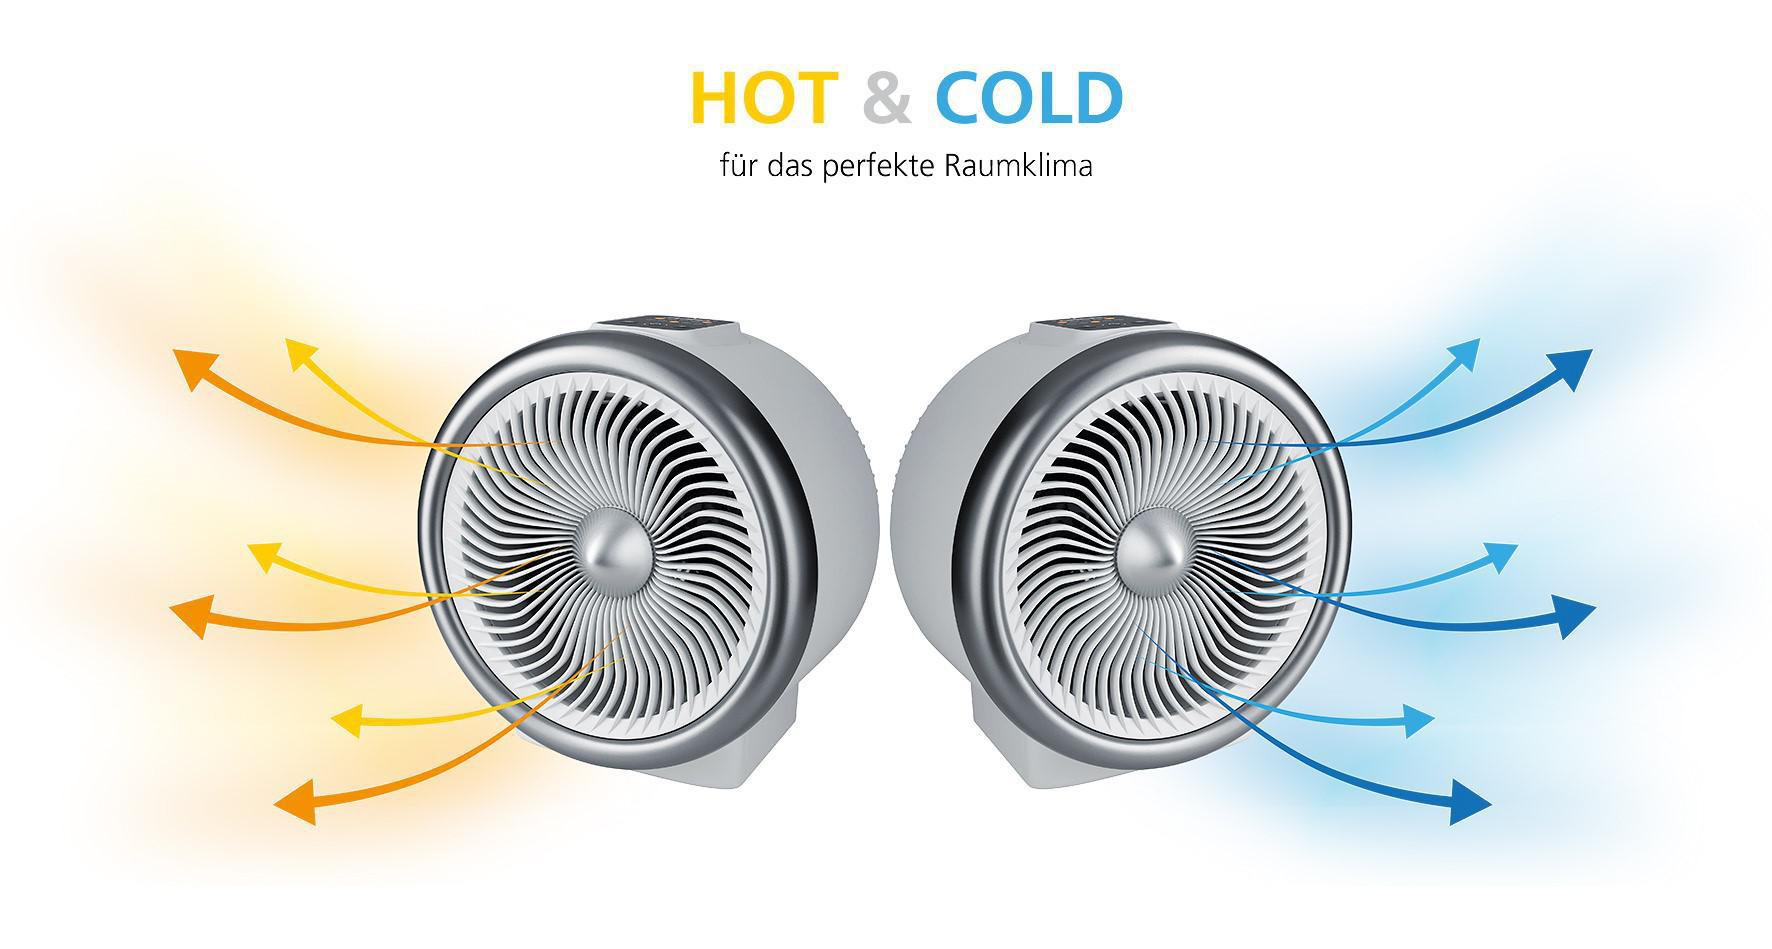 (2000 2 & VTH STEBA Cold Watt) Ventilator/Heizlüfter Weiß/Silber Hot